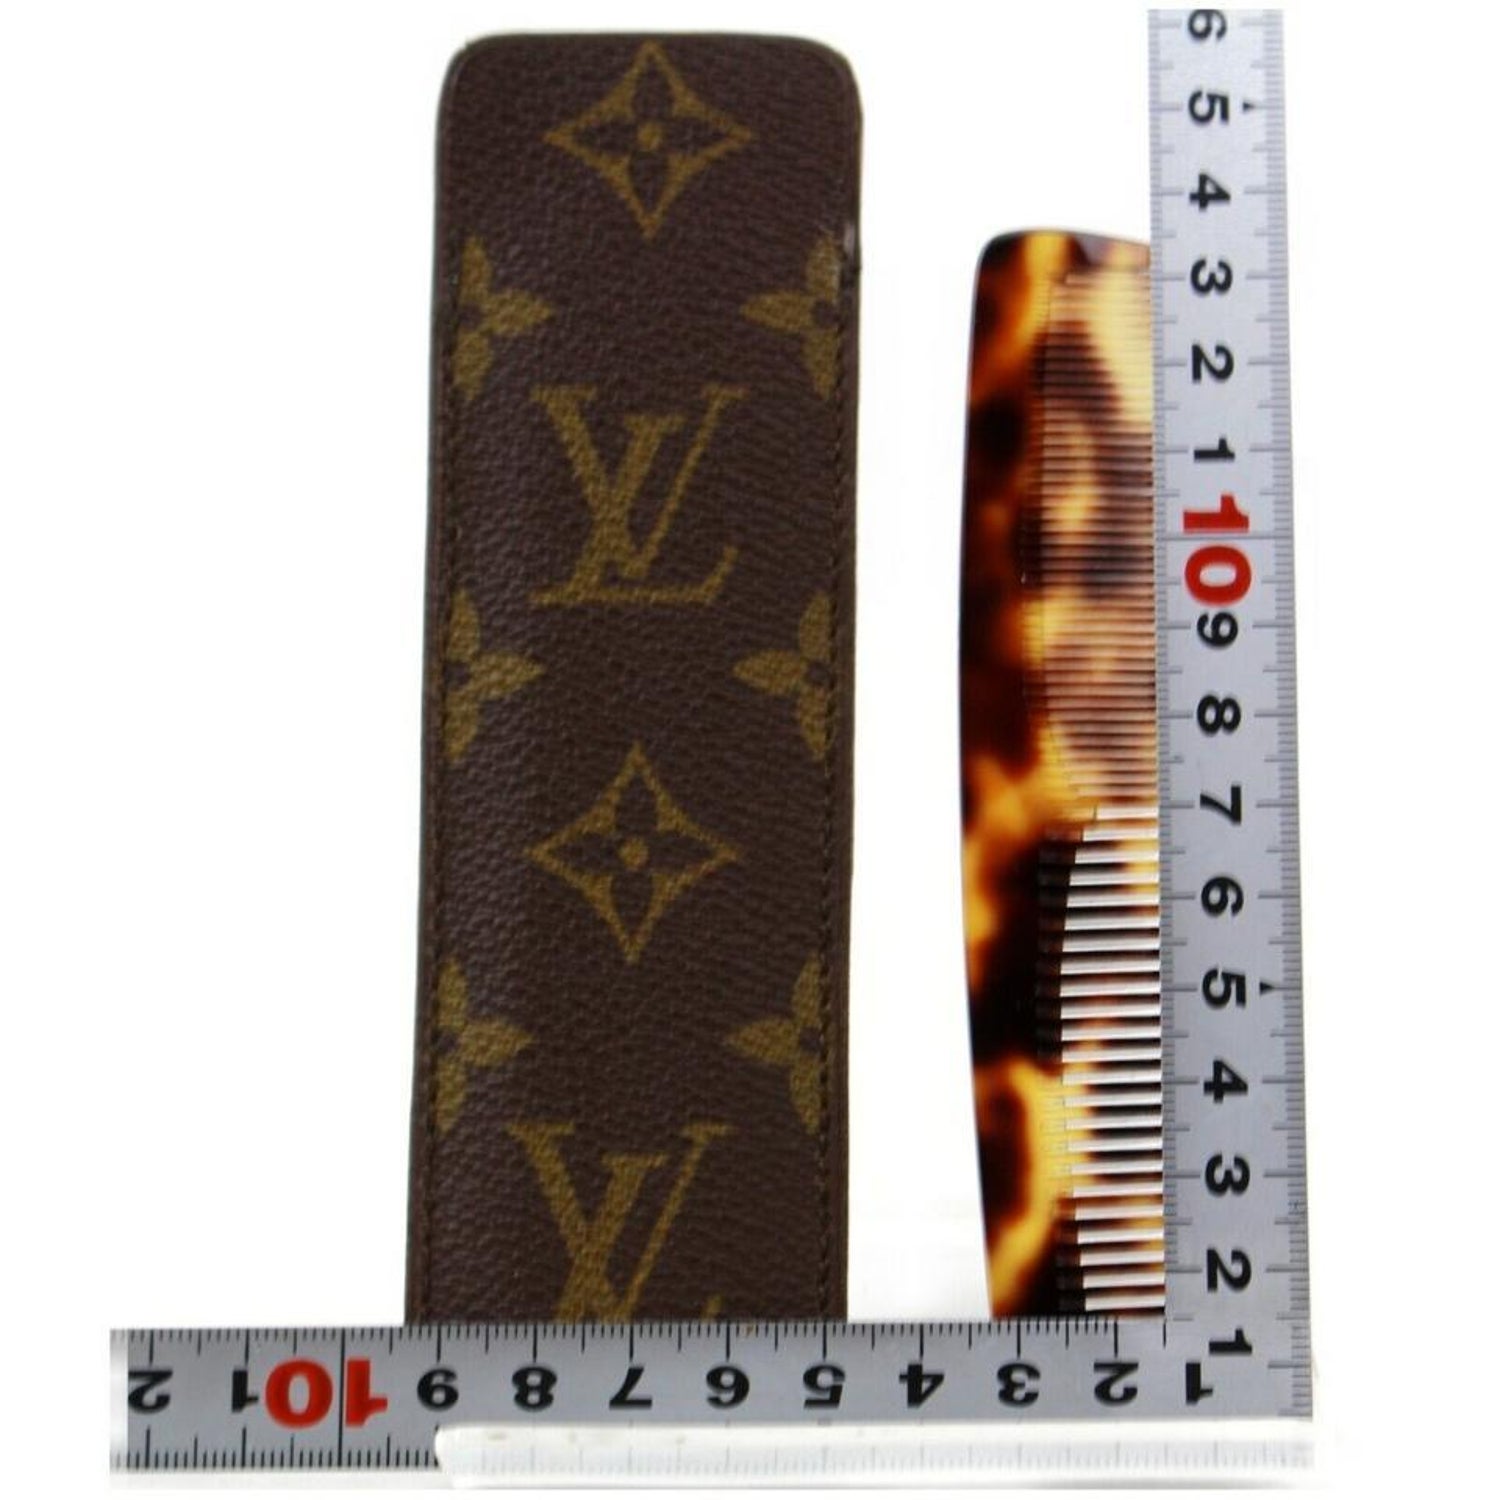 Louis Vuitton Khaki x Black Guitar Strap Bandouliere Crossbody 3LK0105